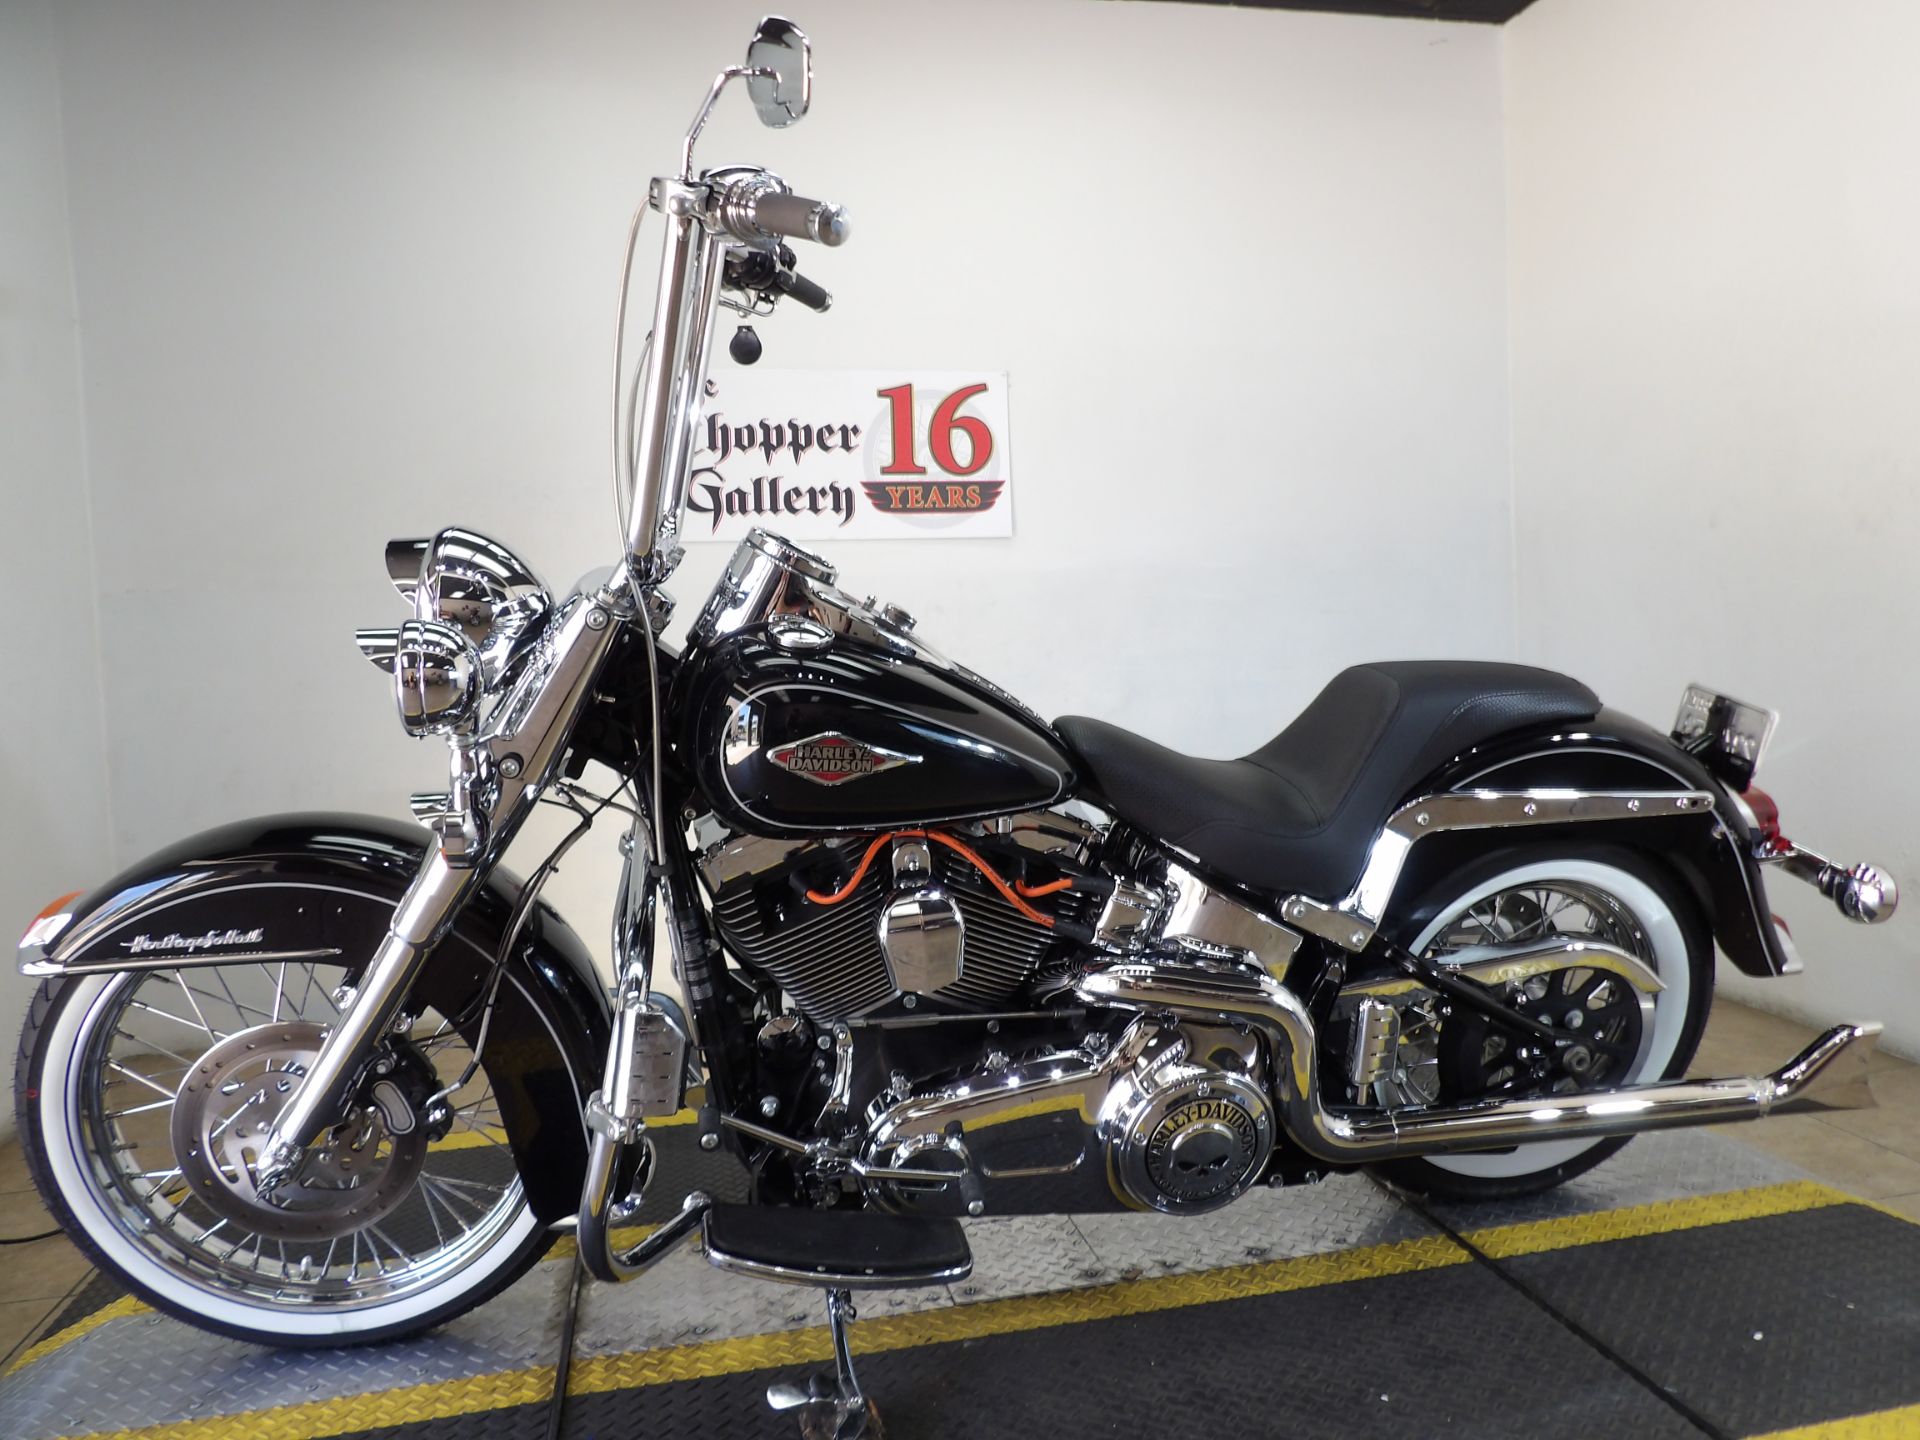 2012 Harley-Davidson Heritage Softail® Classic in Temecula, California - Photo 6